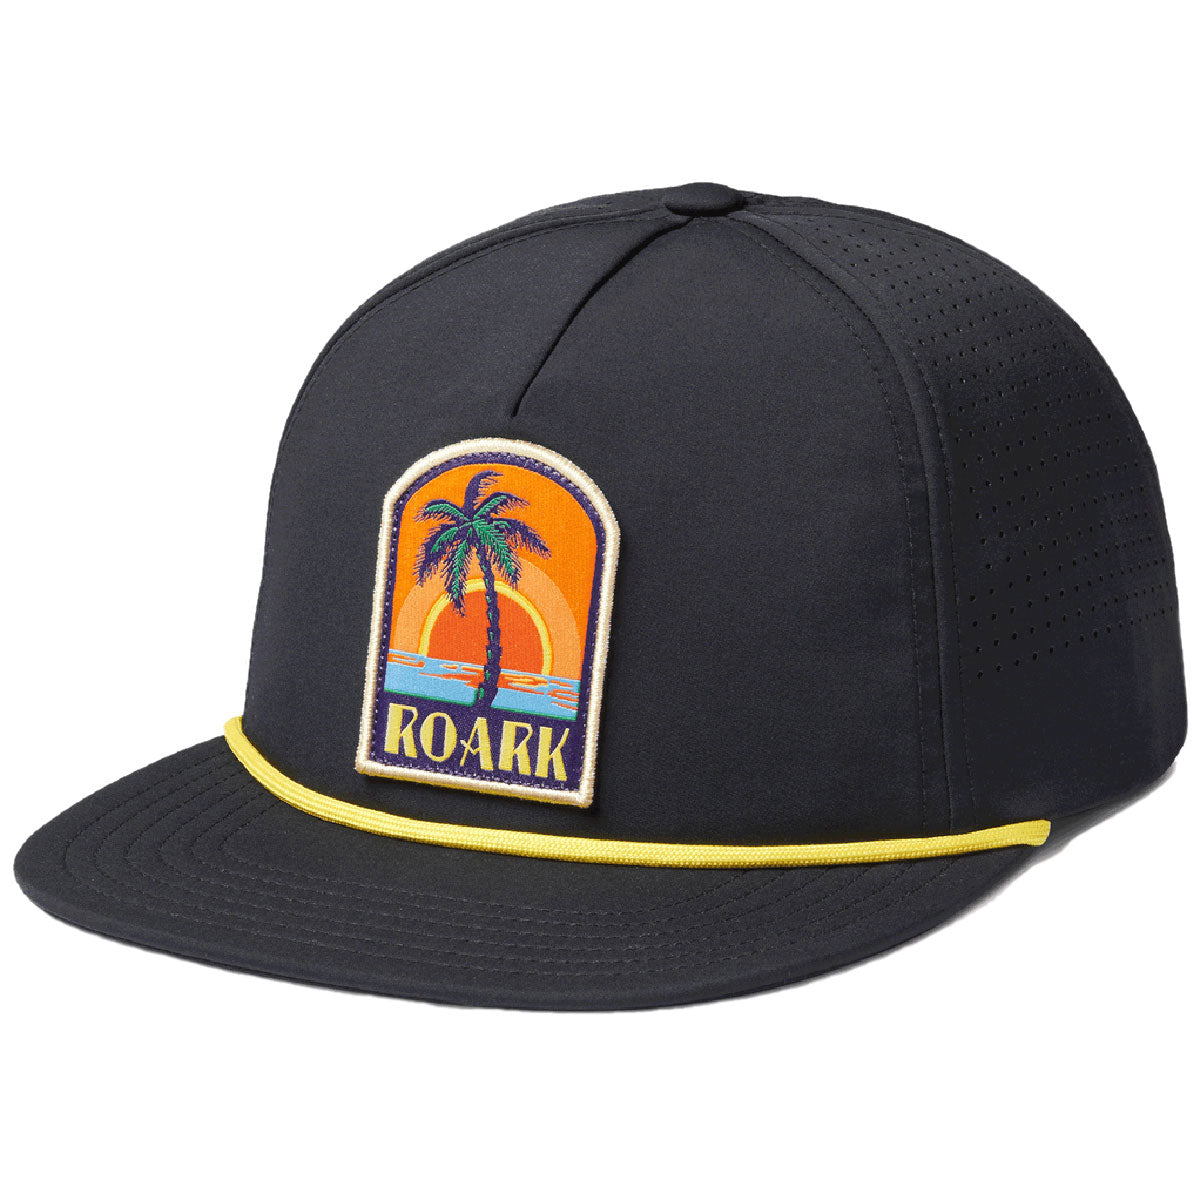 Roark Hybro Hat - Black image 1